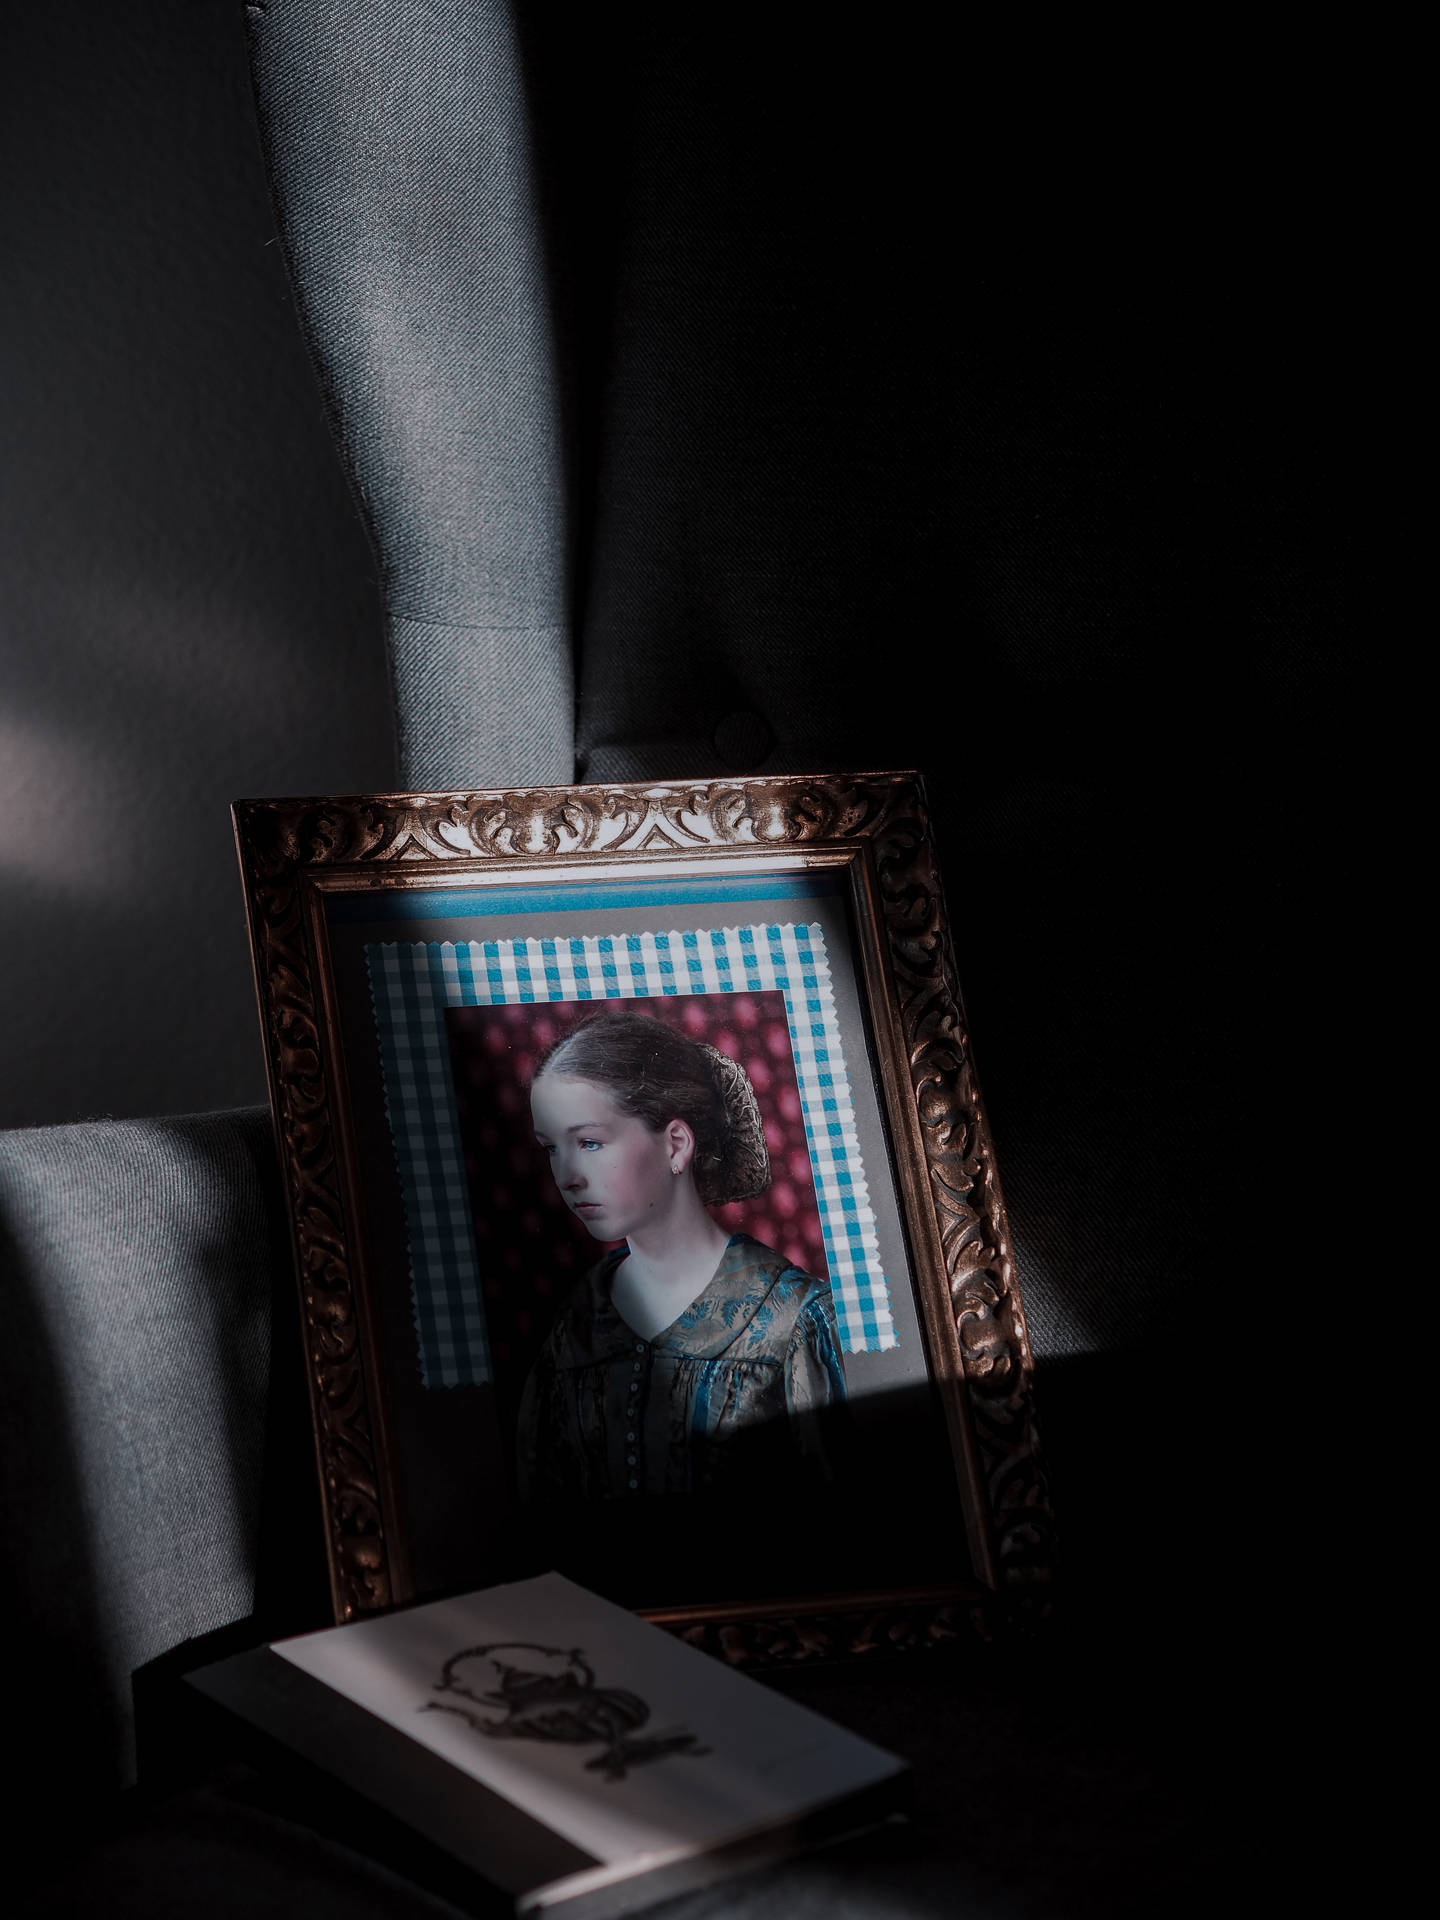 Illuminated Modernity: A Dark Vintage Portrait Background